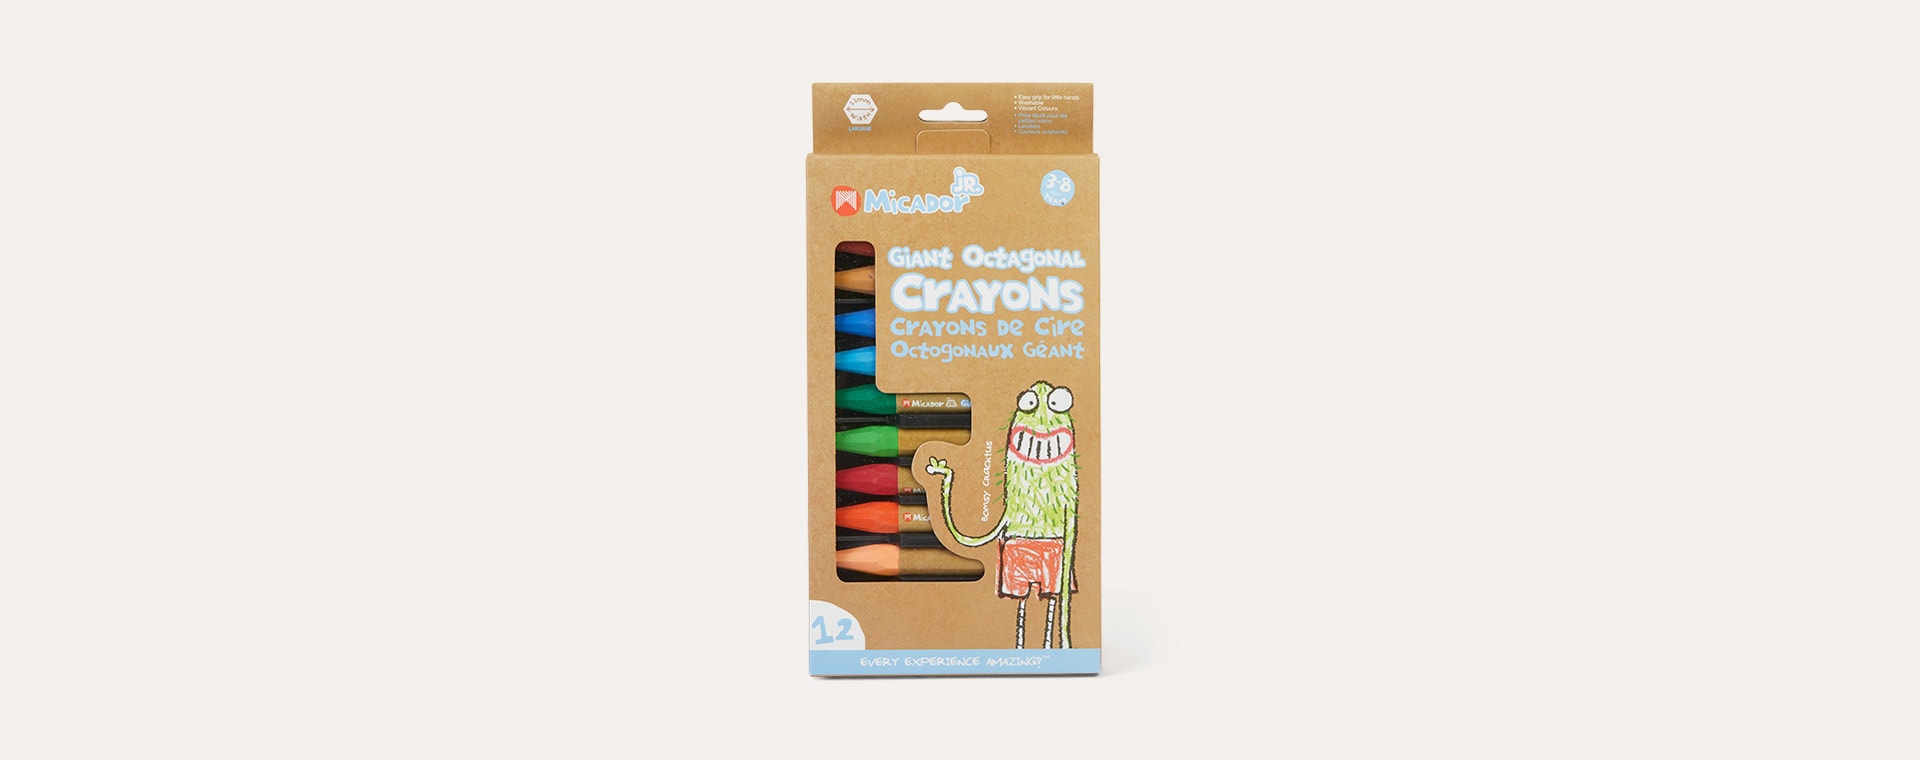 Multi Micador 12-Pack Giant Crayons Octagonal